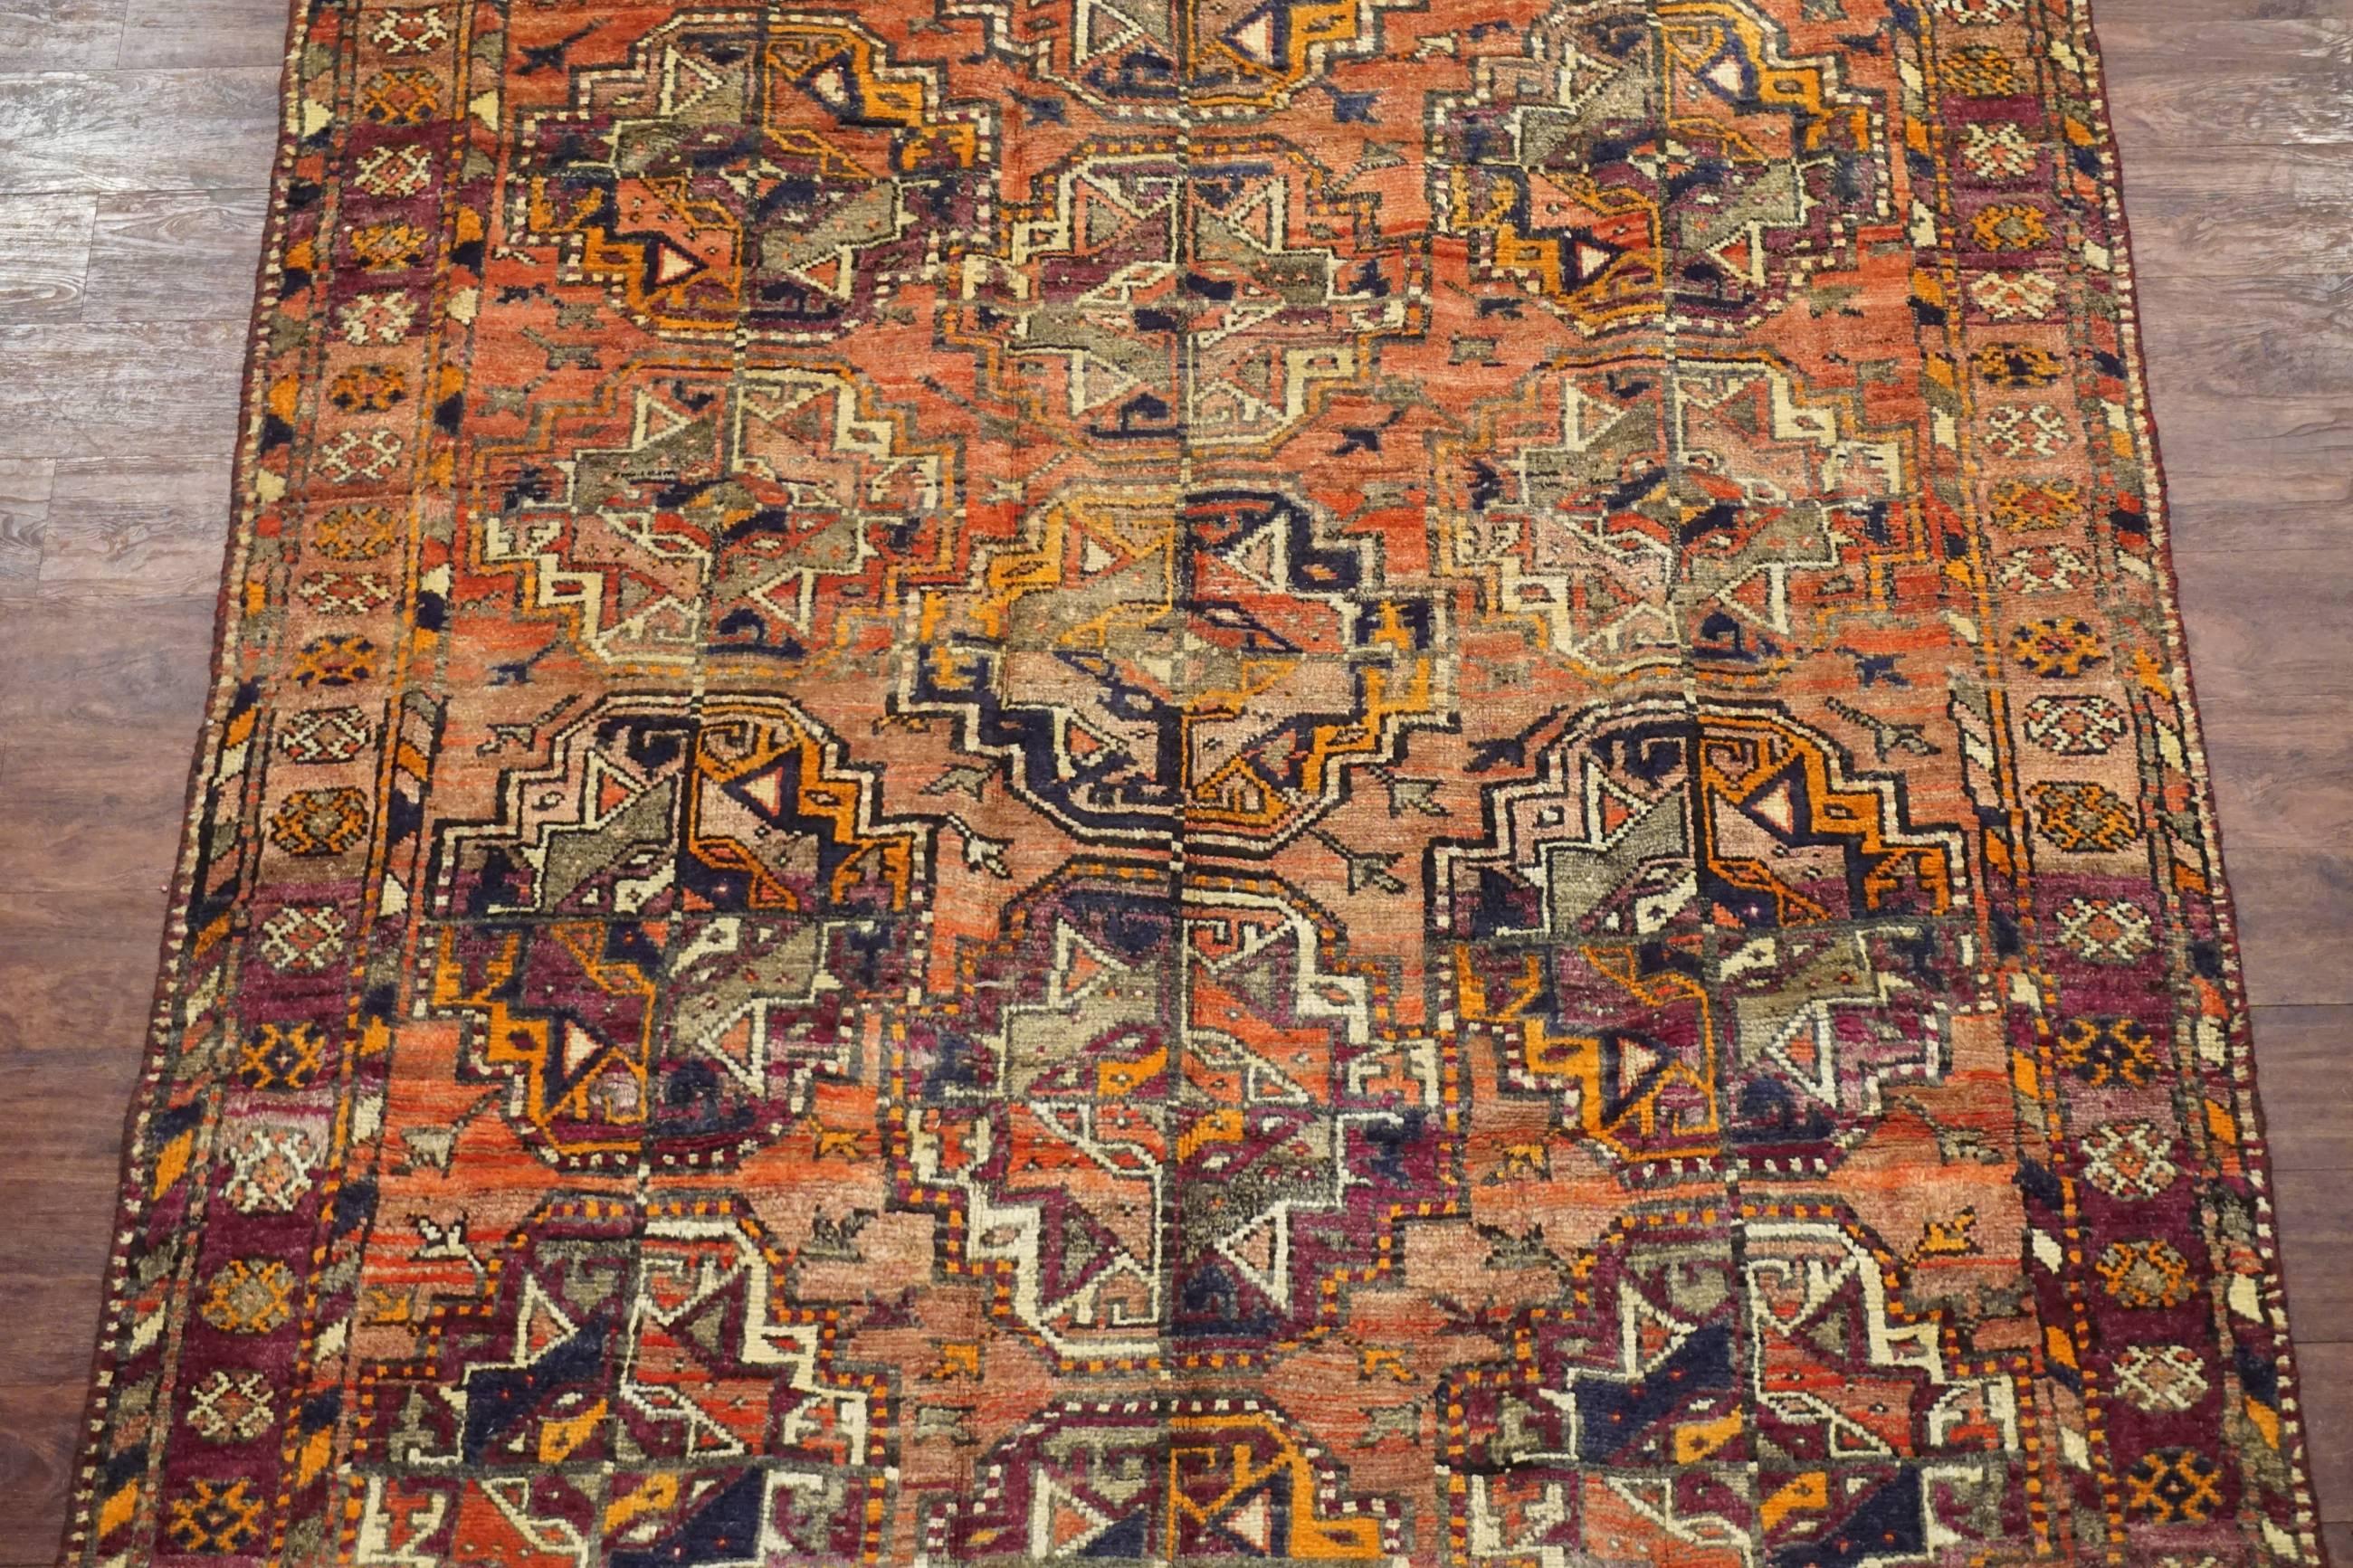 Antique Persian Tribal Bukhara Turkoman rug with abrash

circa 1900

Measures: 5' 6